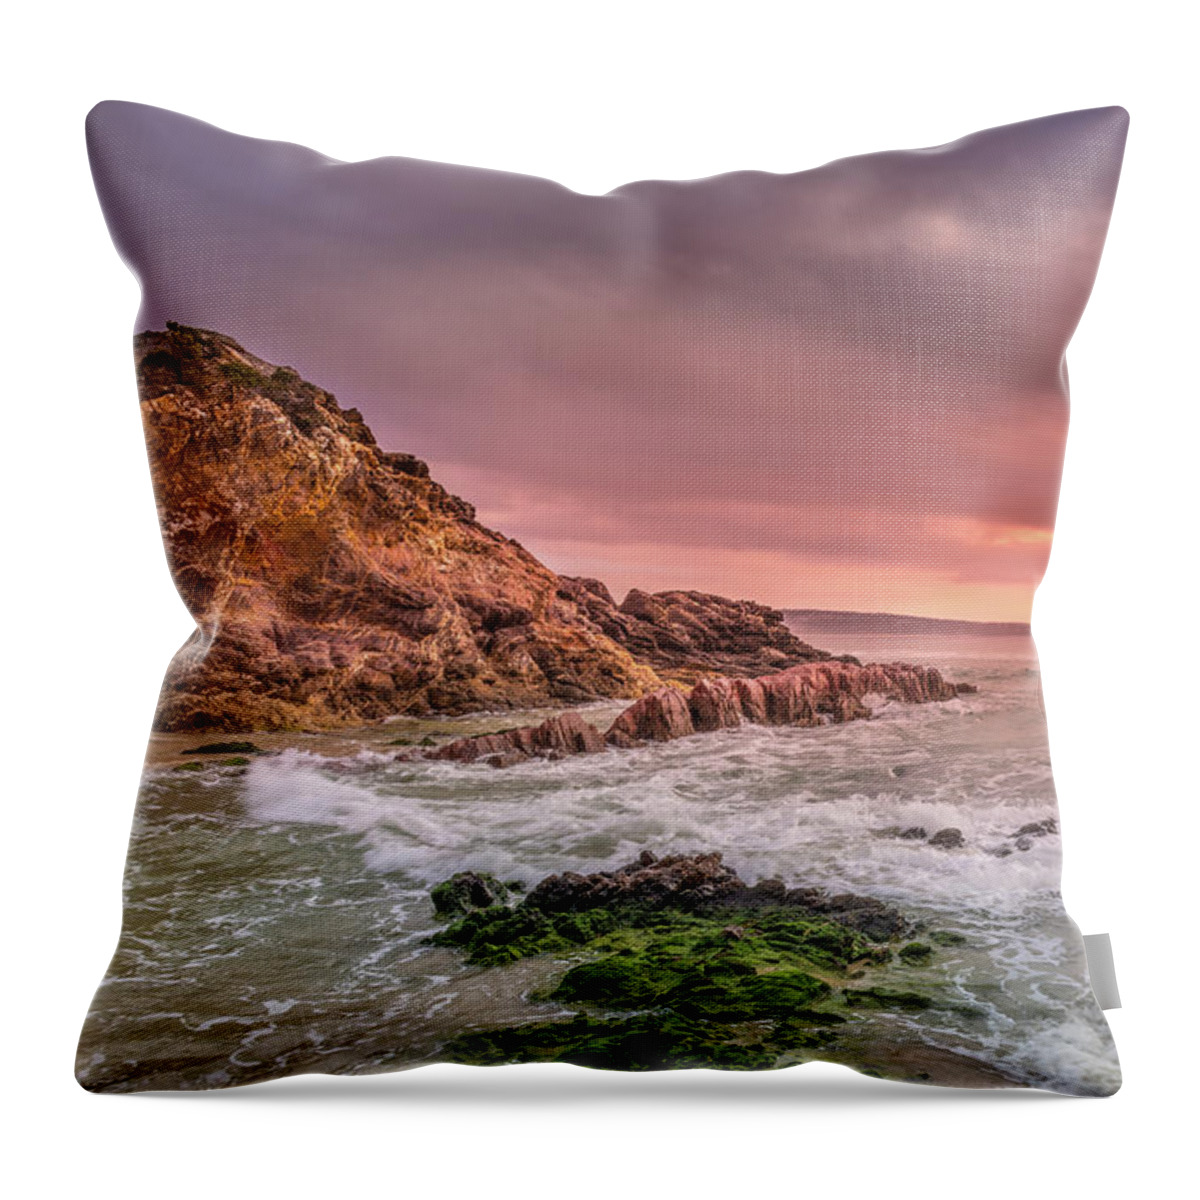 Pambula Throw Pillow featuring the photograph Pambula Rocks by Racheal Christian